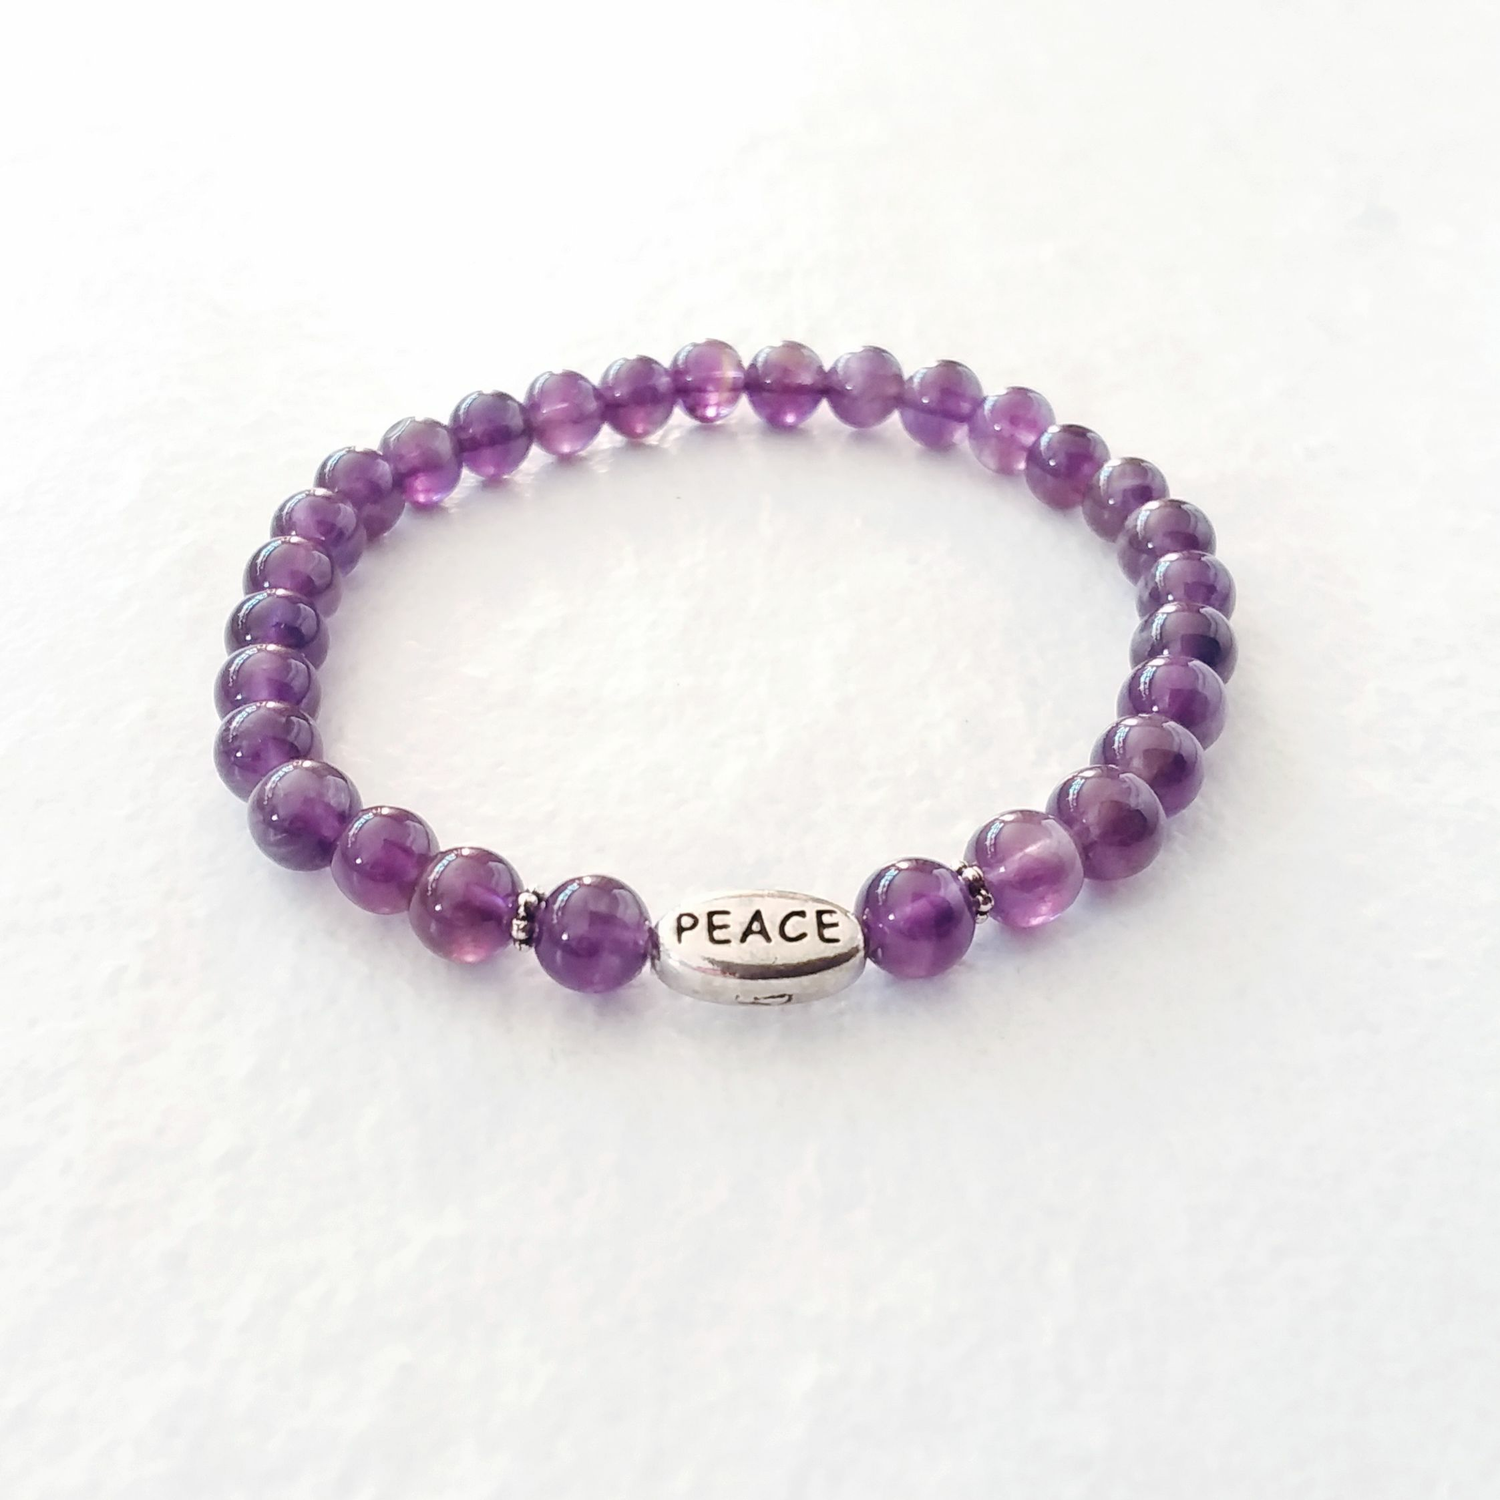 Amethyst Stretch Bracelet with “Peace”